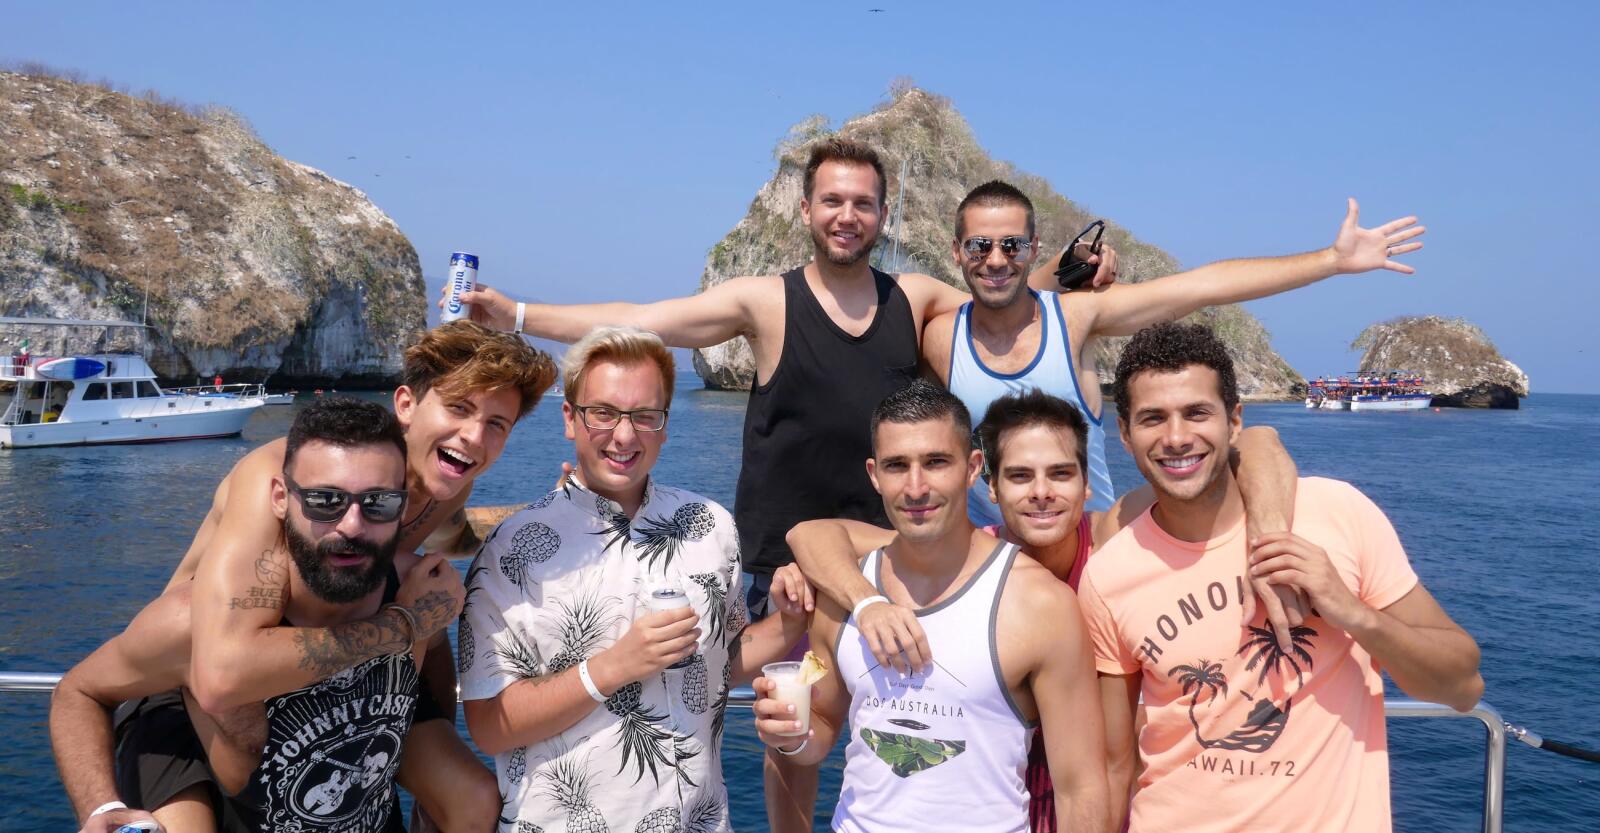 Playa de los Muertos in Puerto Vallarta is one of the best gay beaches in the world